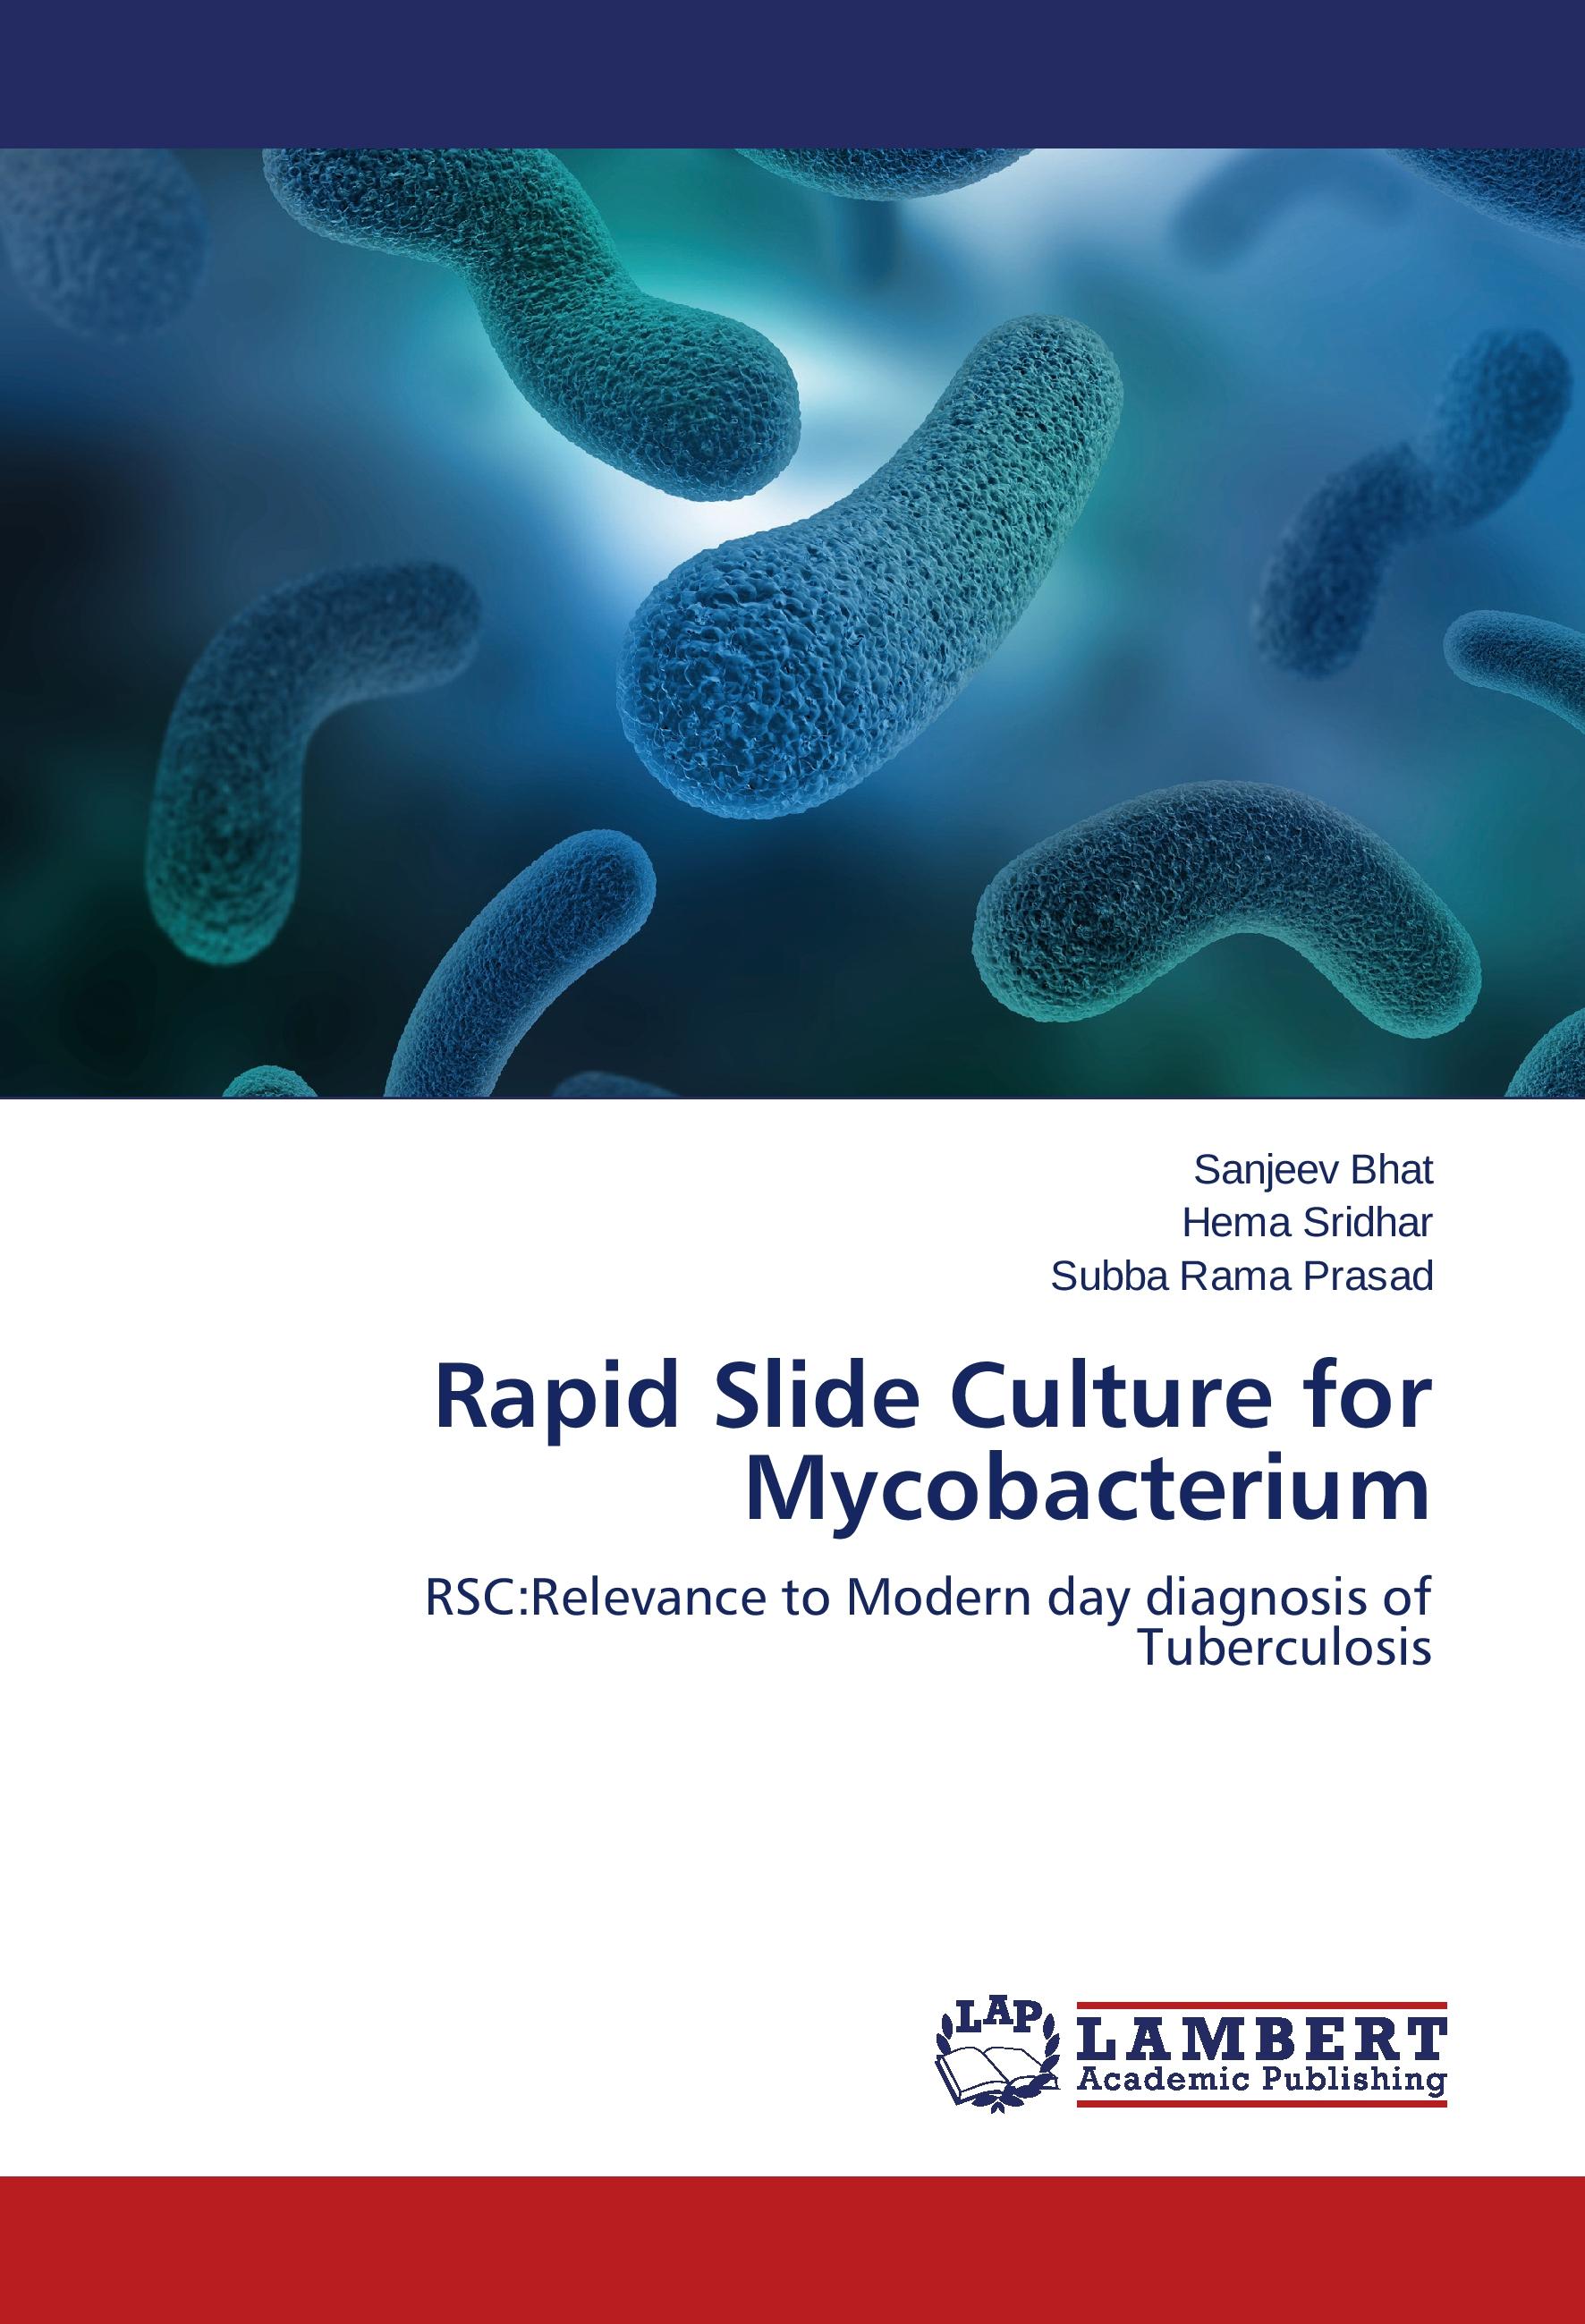 Rapid Slide Culture for Mycobacterium - Sanjeev Bhat Hema Sridhar Subba Rama Prasad